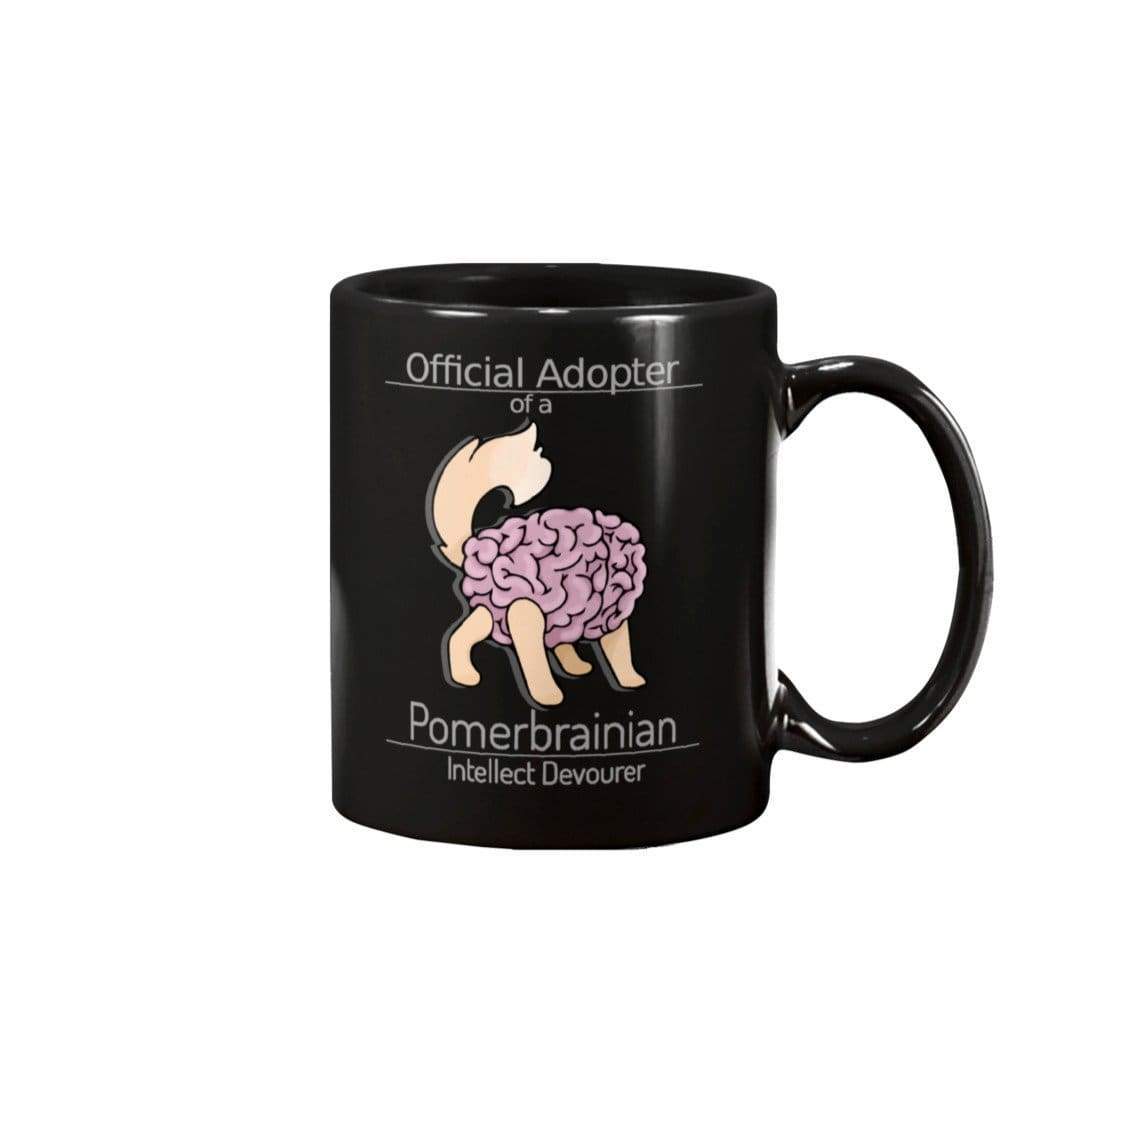 Pomerbrainian Intellect Devourer 15oz Coffee Mug - Black / 15OZ - Mugs